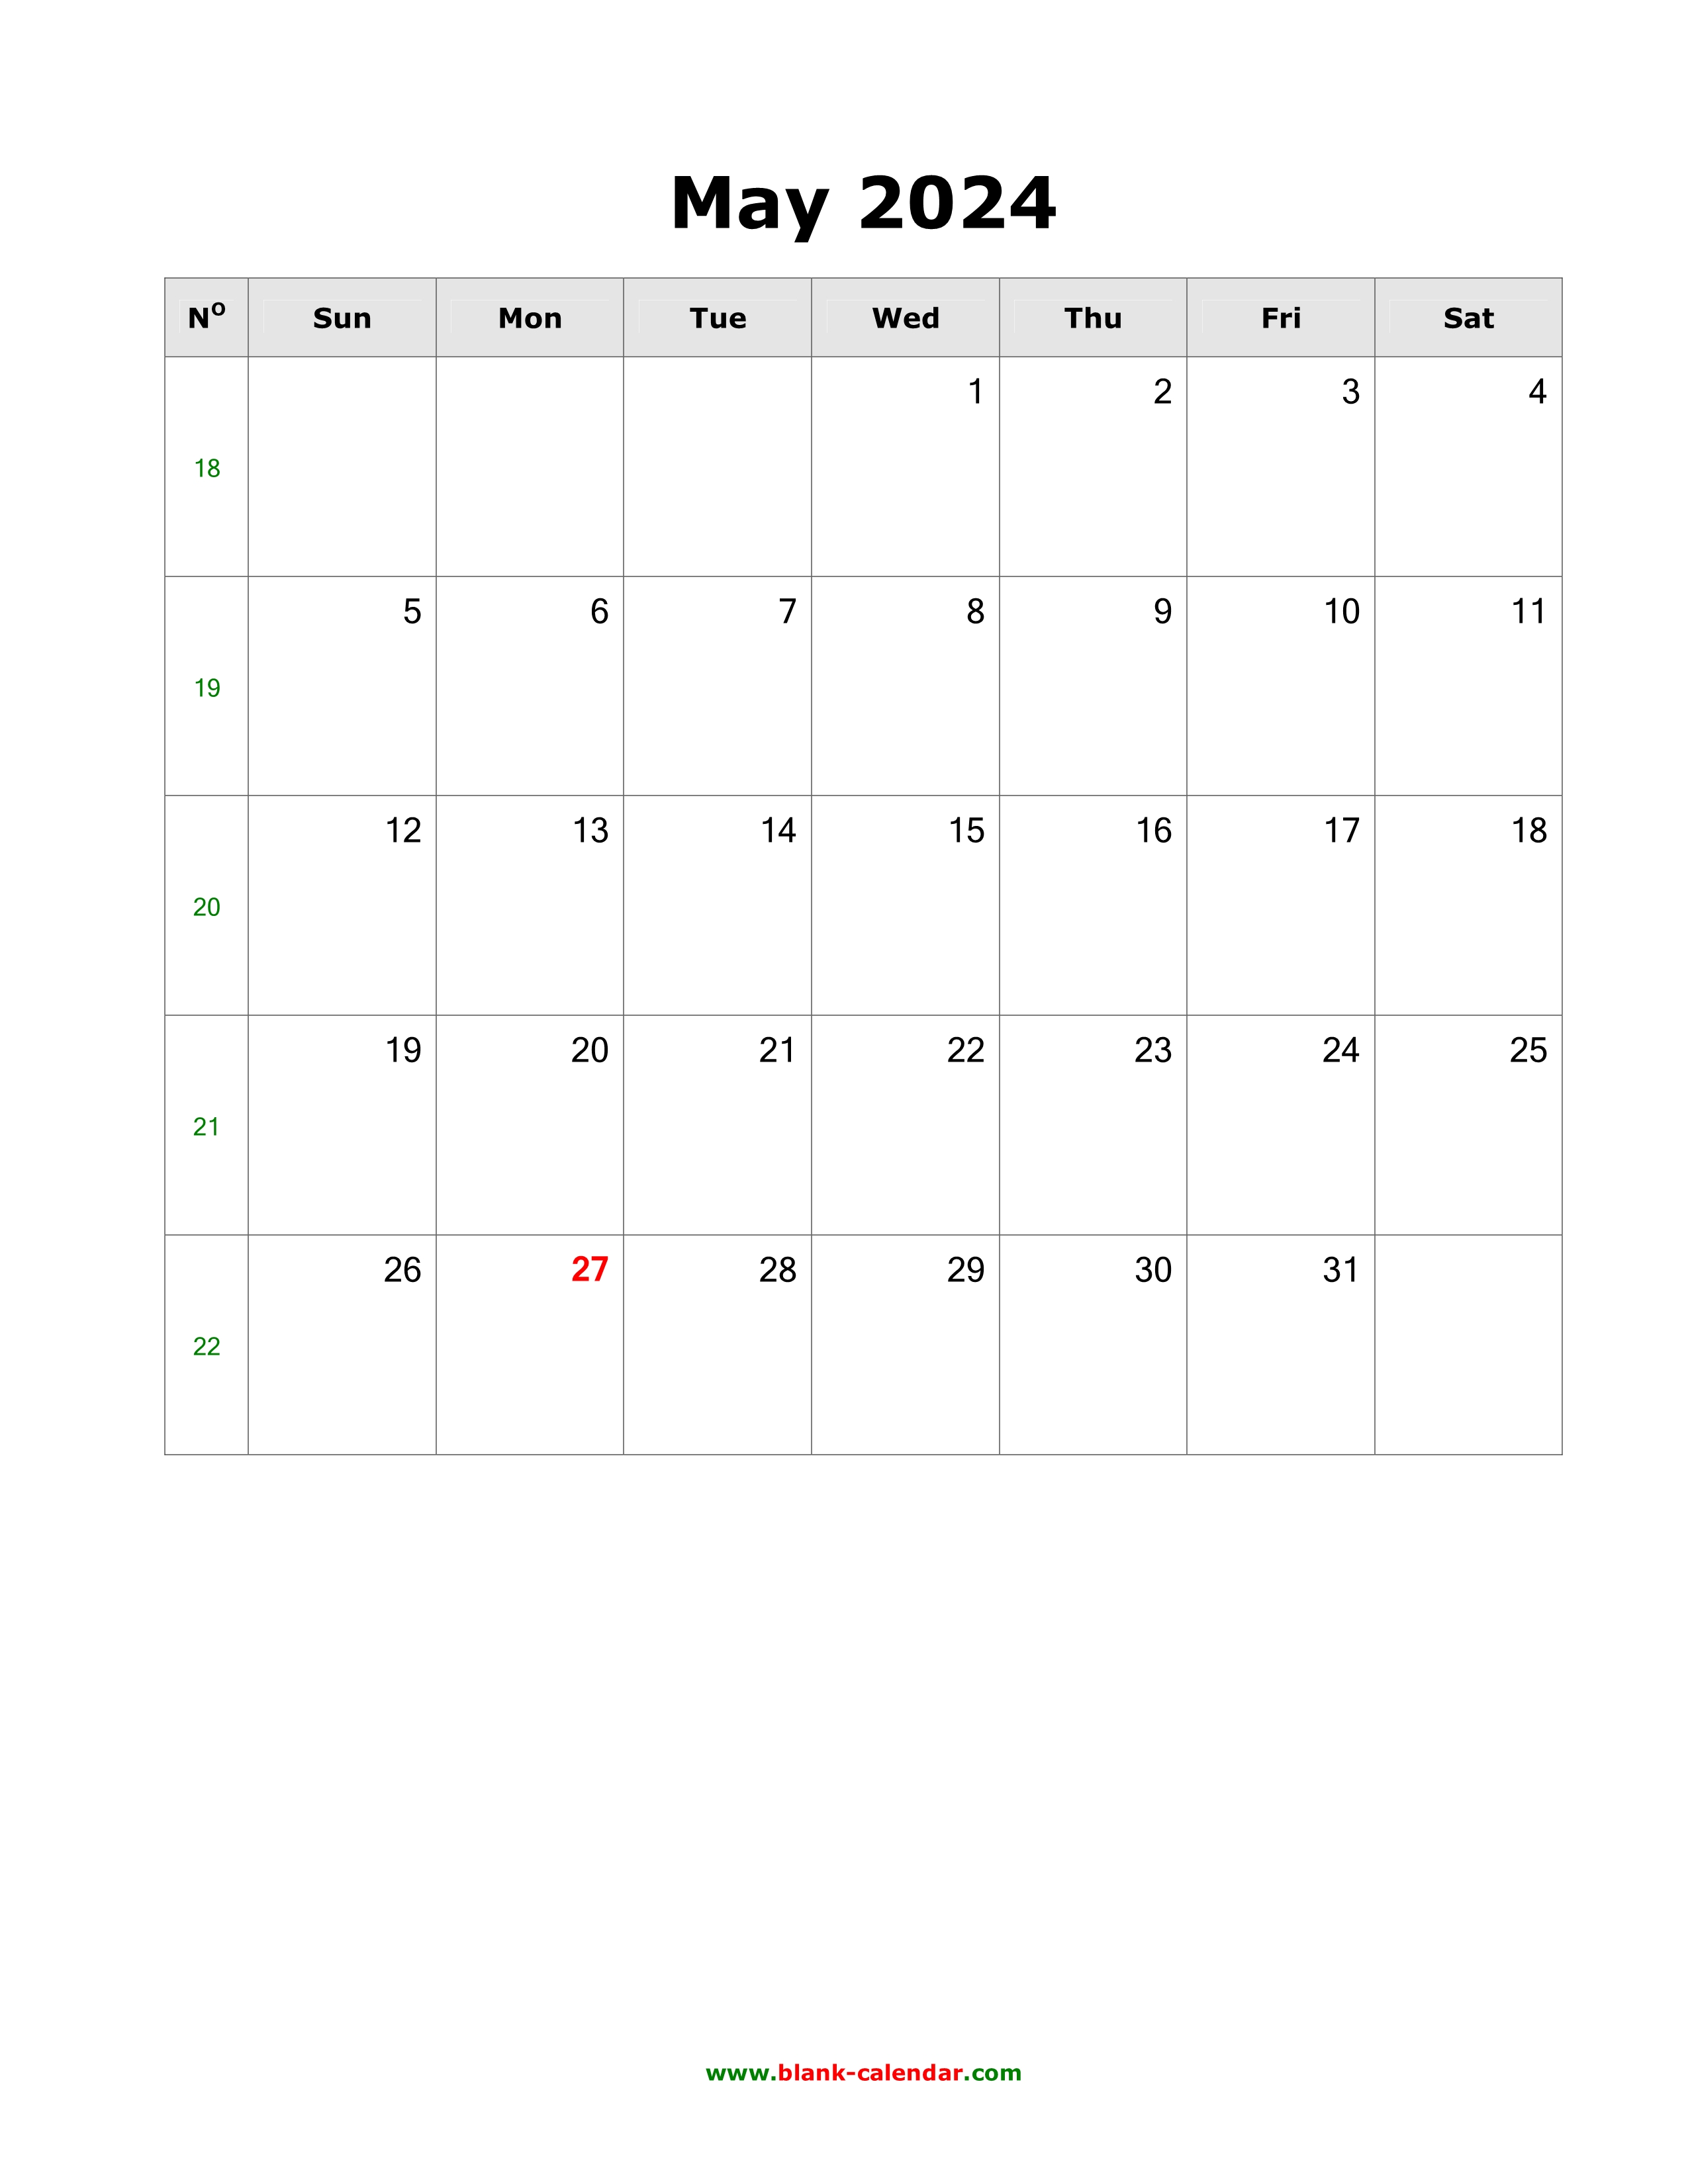 Download May 2024 Blank Calendar (vertical)